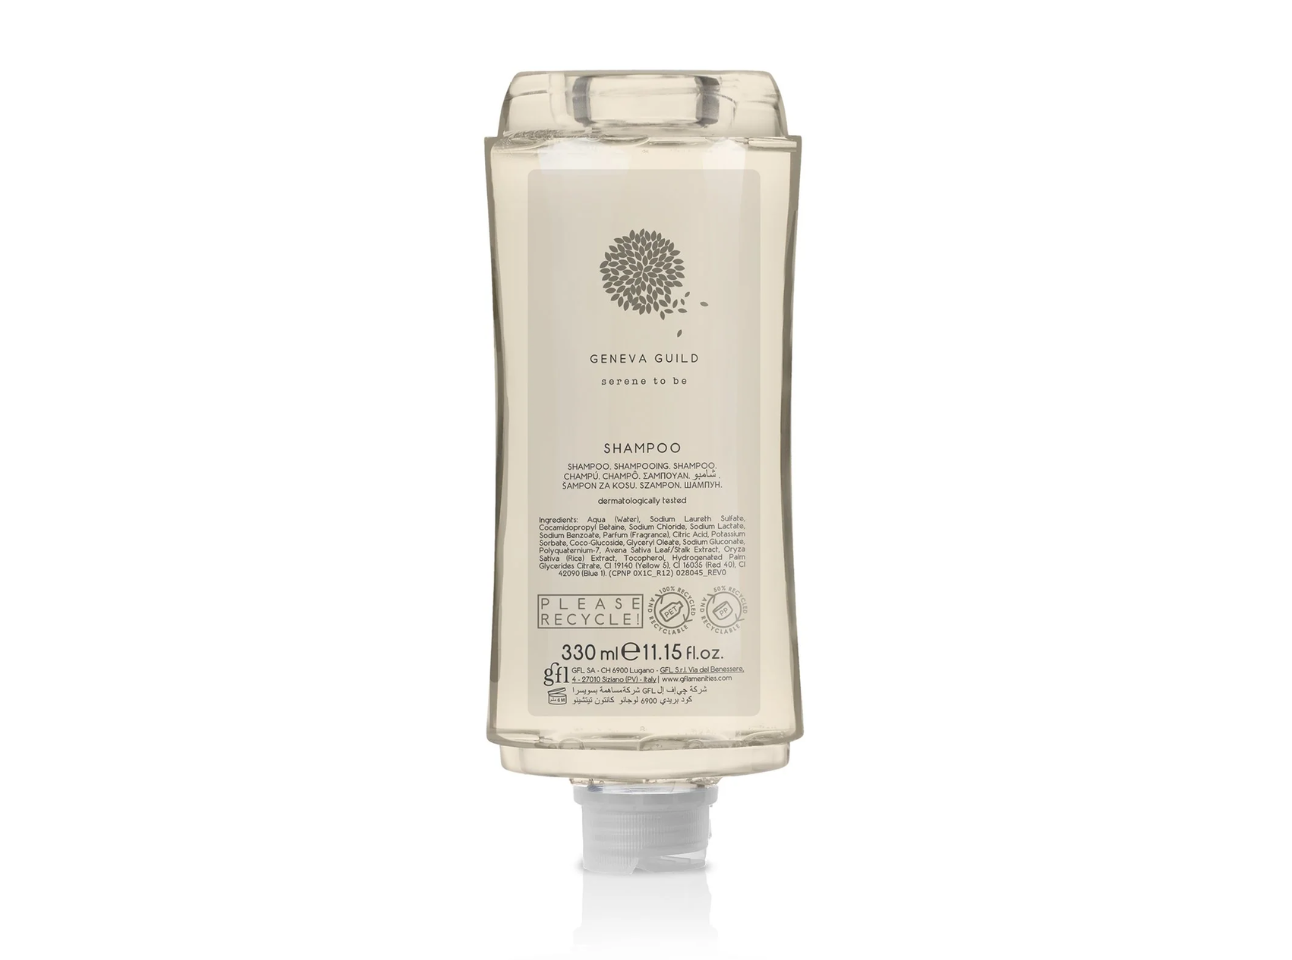 Geneva Guild Shampoo - Squeeze Spenderflasche 330 ml aus recyceltem PET